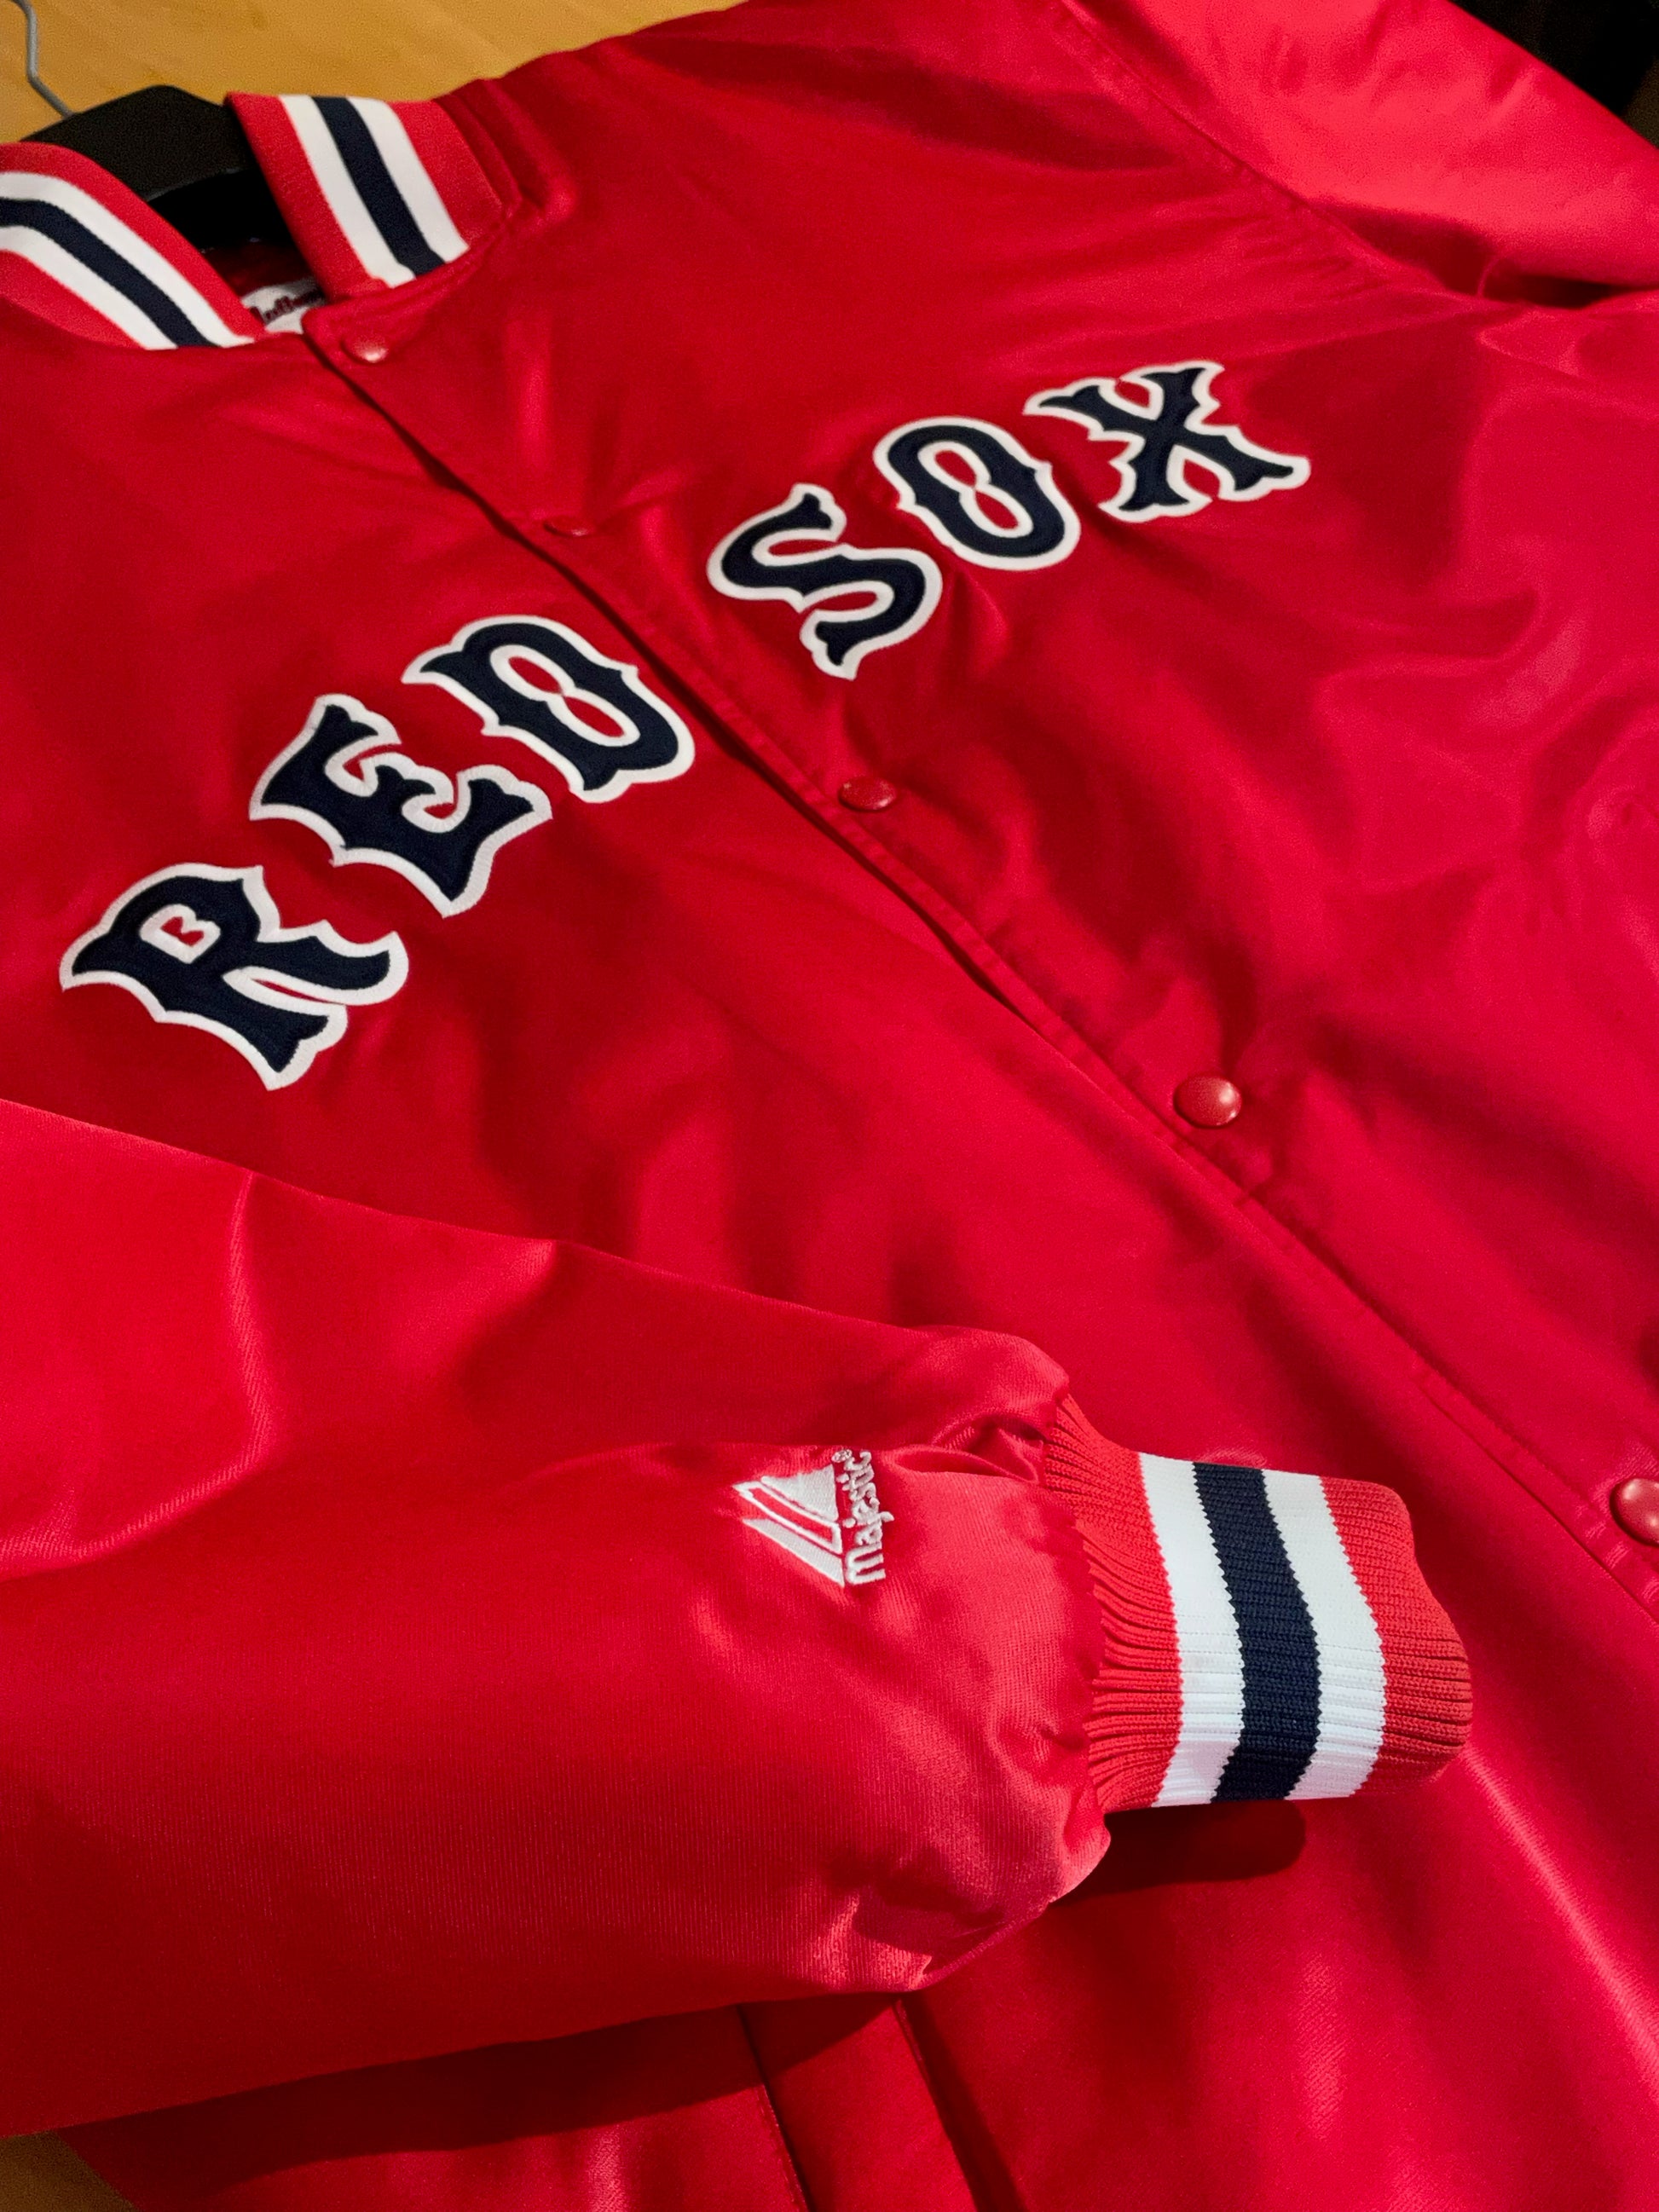 Boston Redsox Throwback Sports Apparel & Jerseys